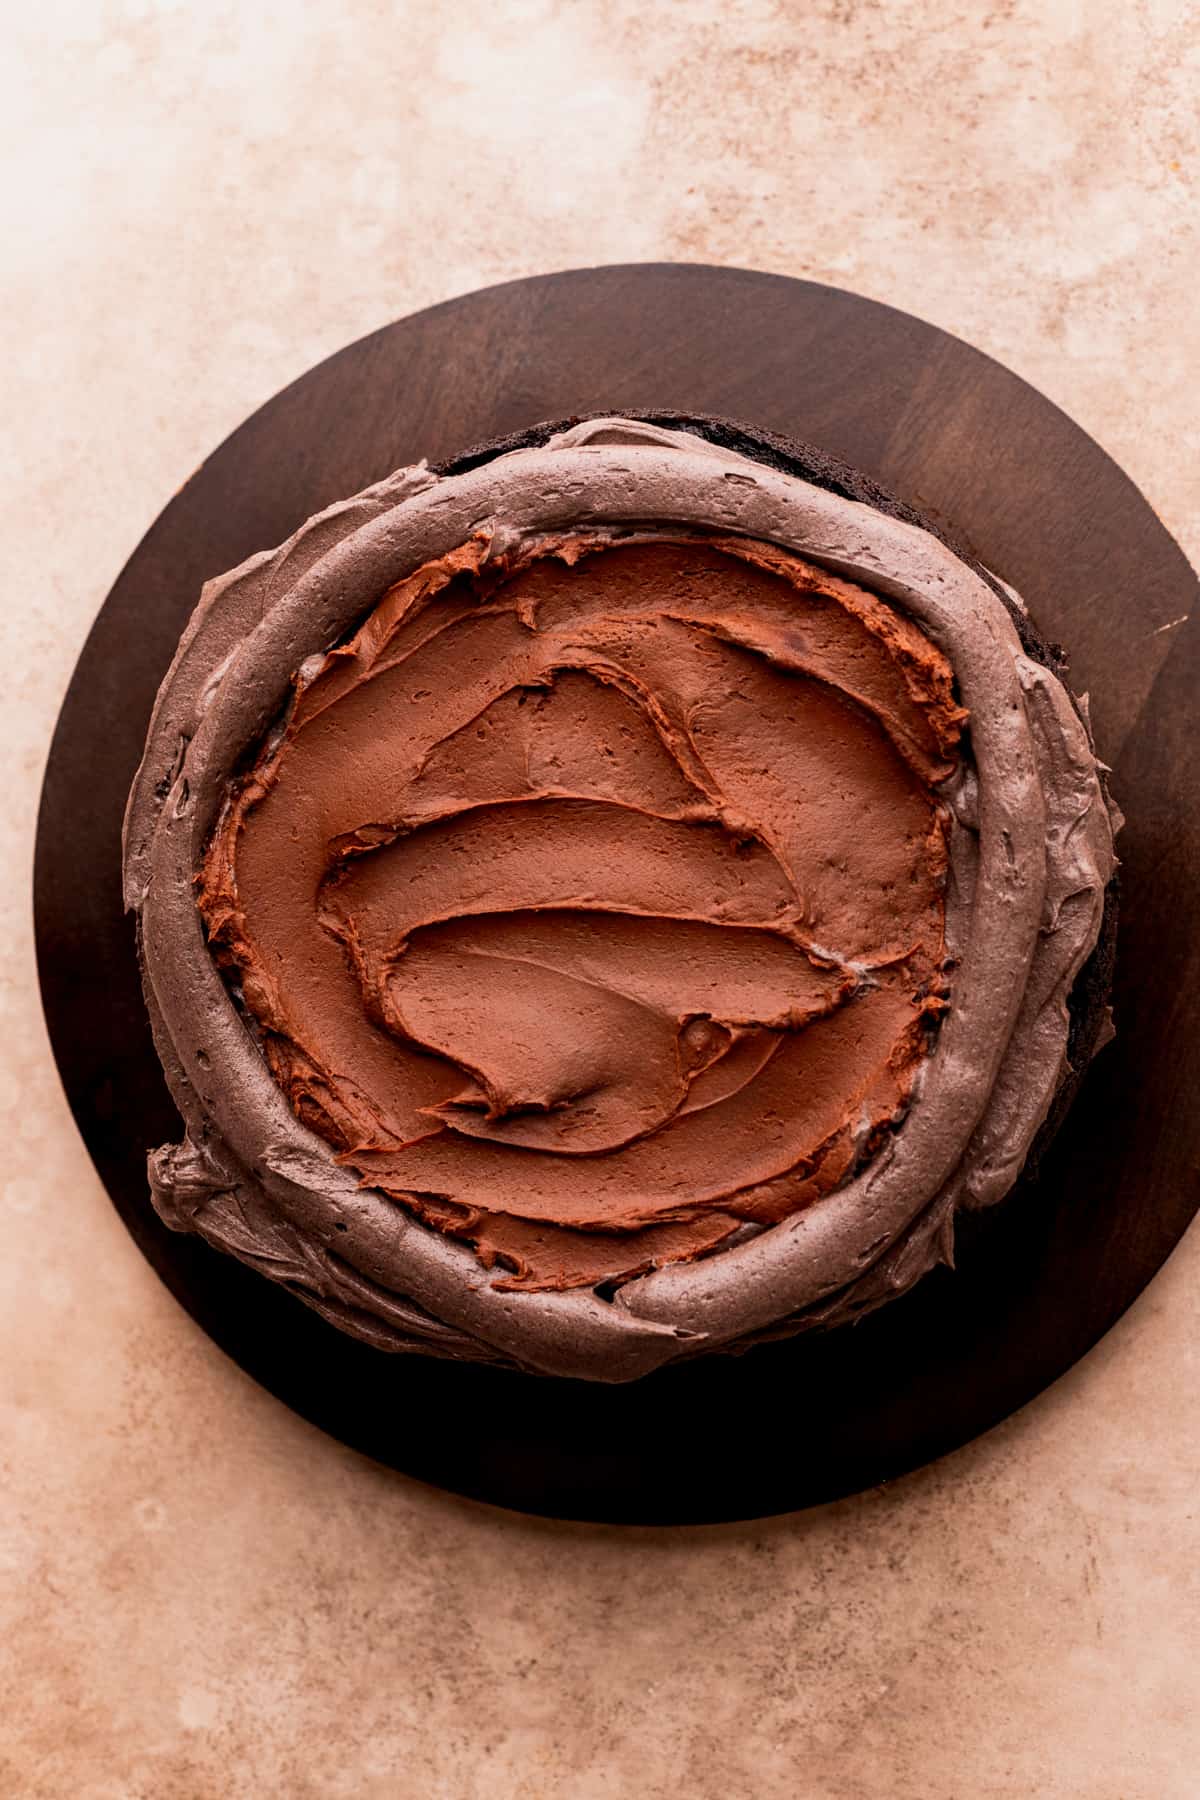 Chocolate ganache on top of cake layer.